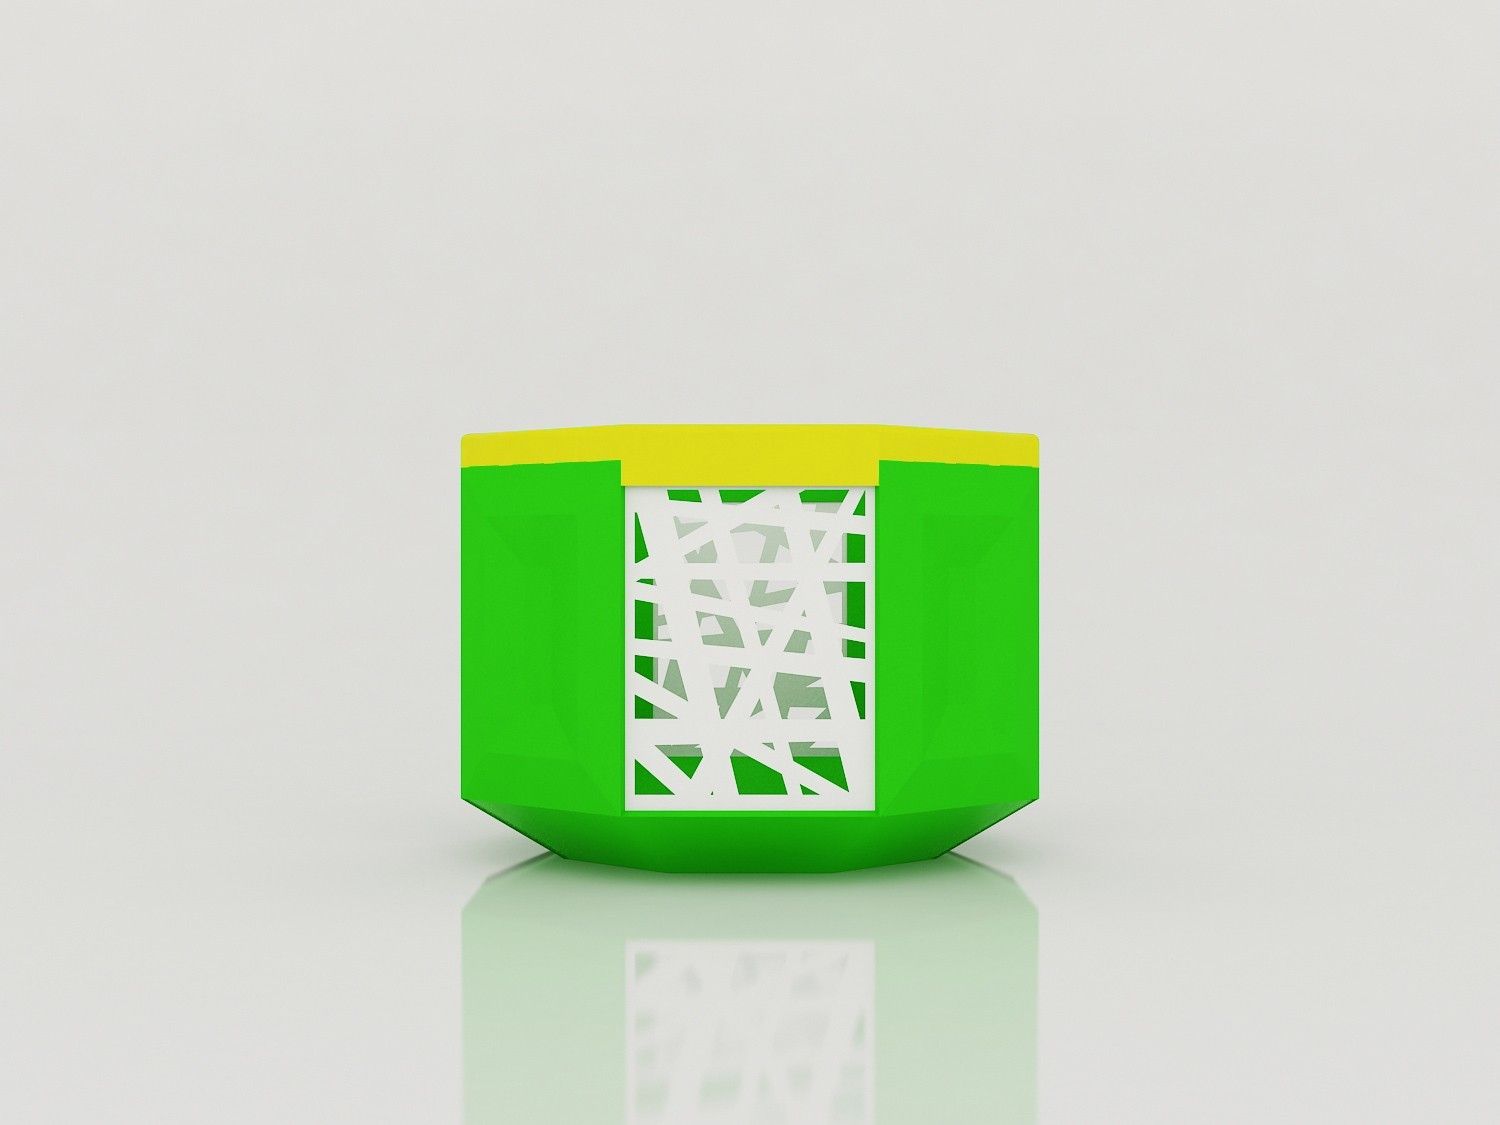 pot-it_resille_v1_studio02.jpg Download STL file POT-IT, pot or pot cache • 3D print model, Tibe-Design